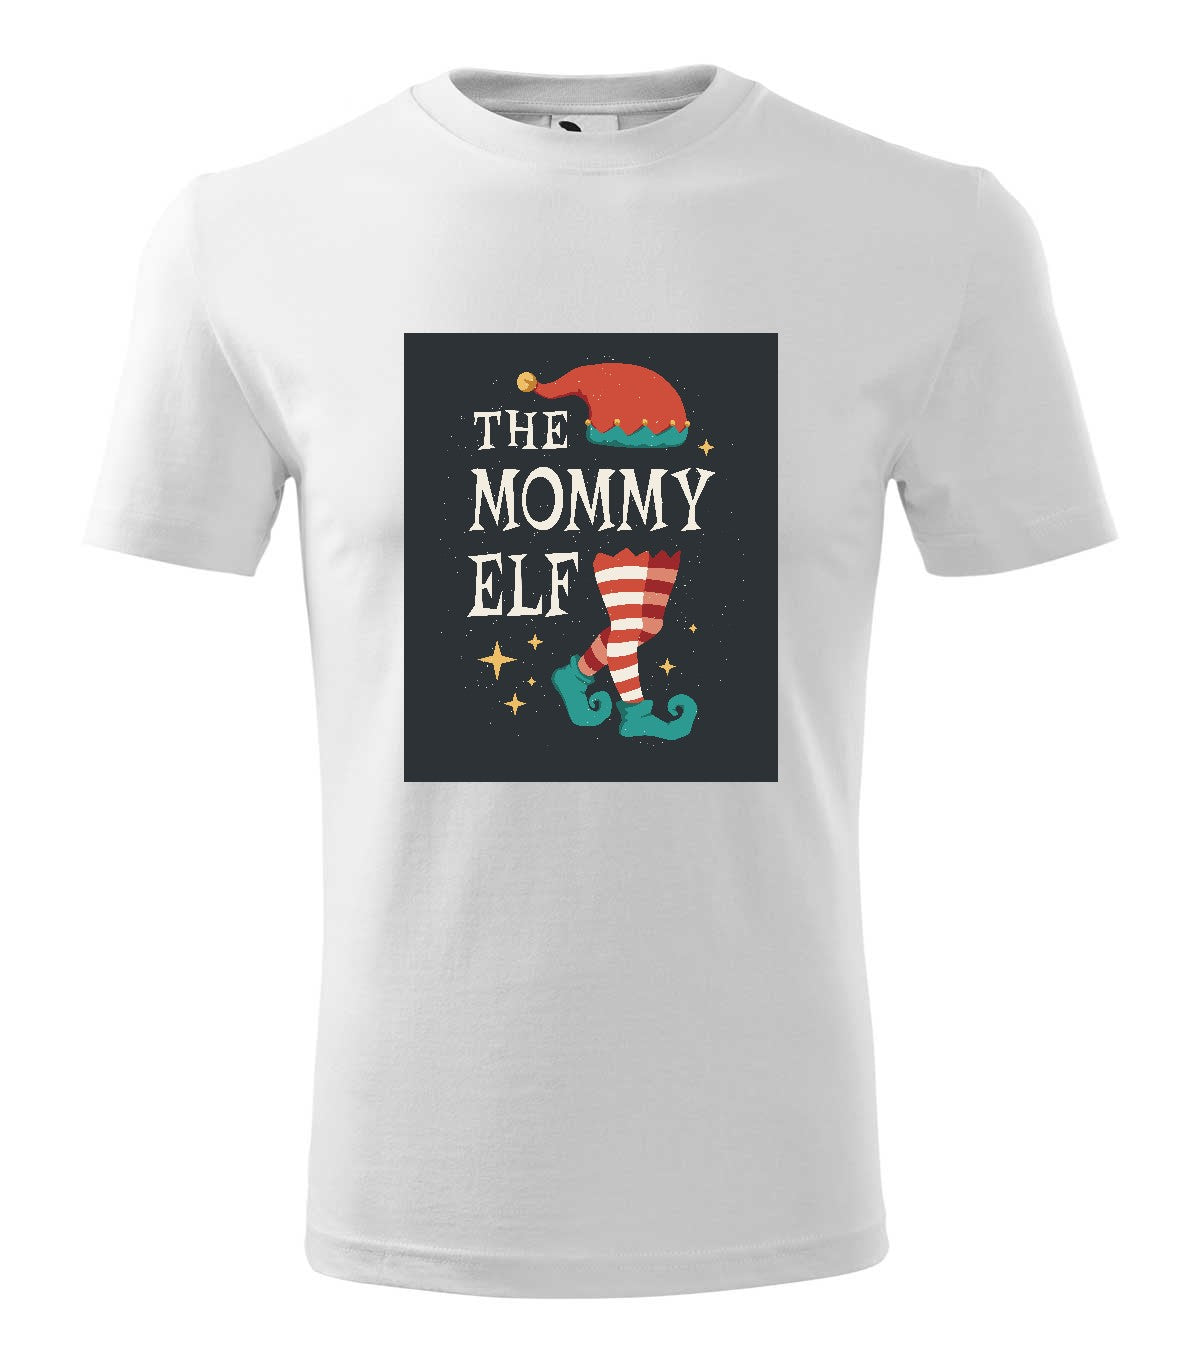 The Mommy Elf férfi technikai póló